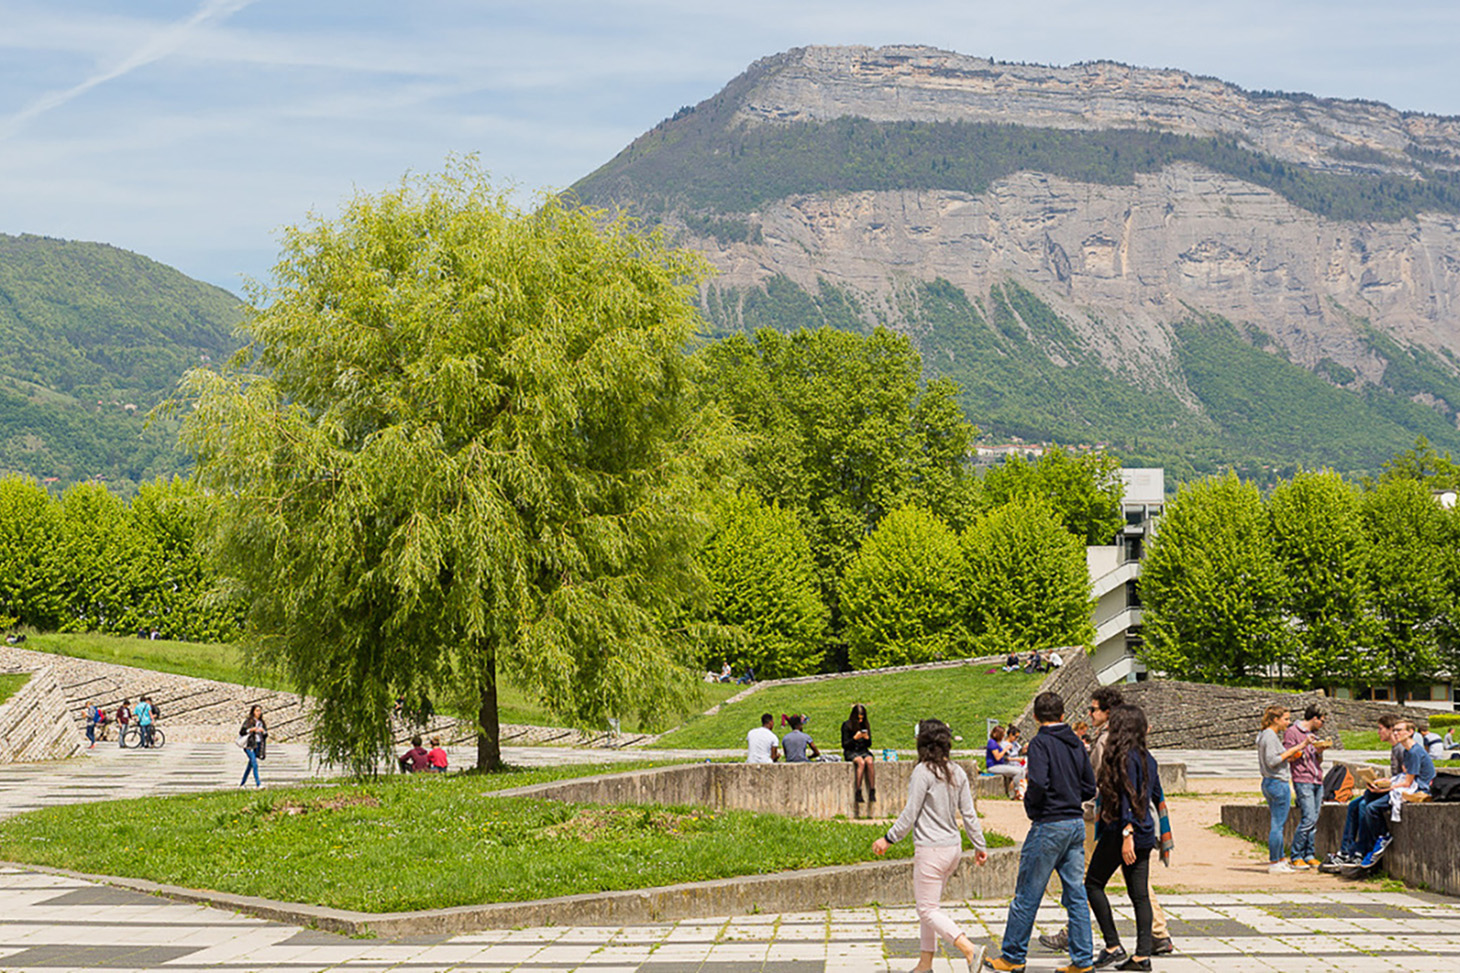 Find more about Université Grenoble Alpes (UGA)